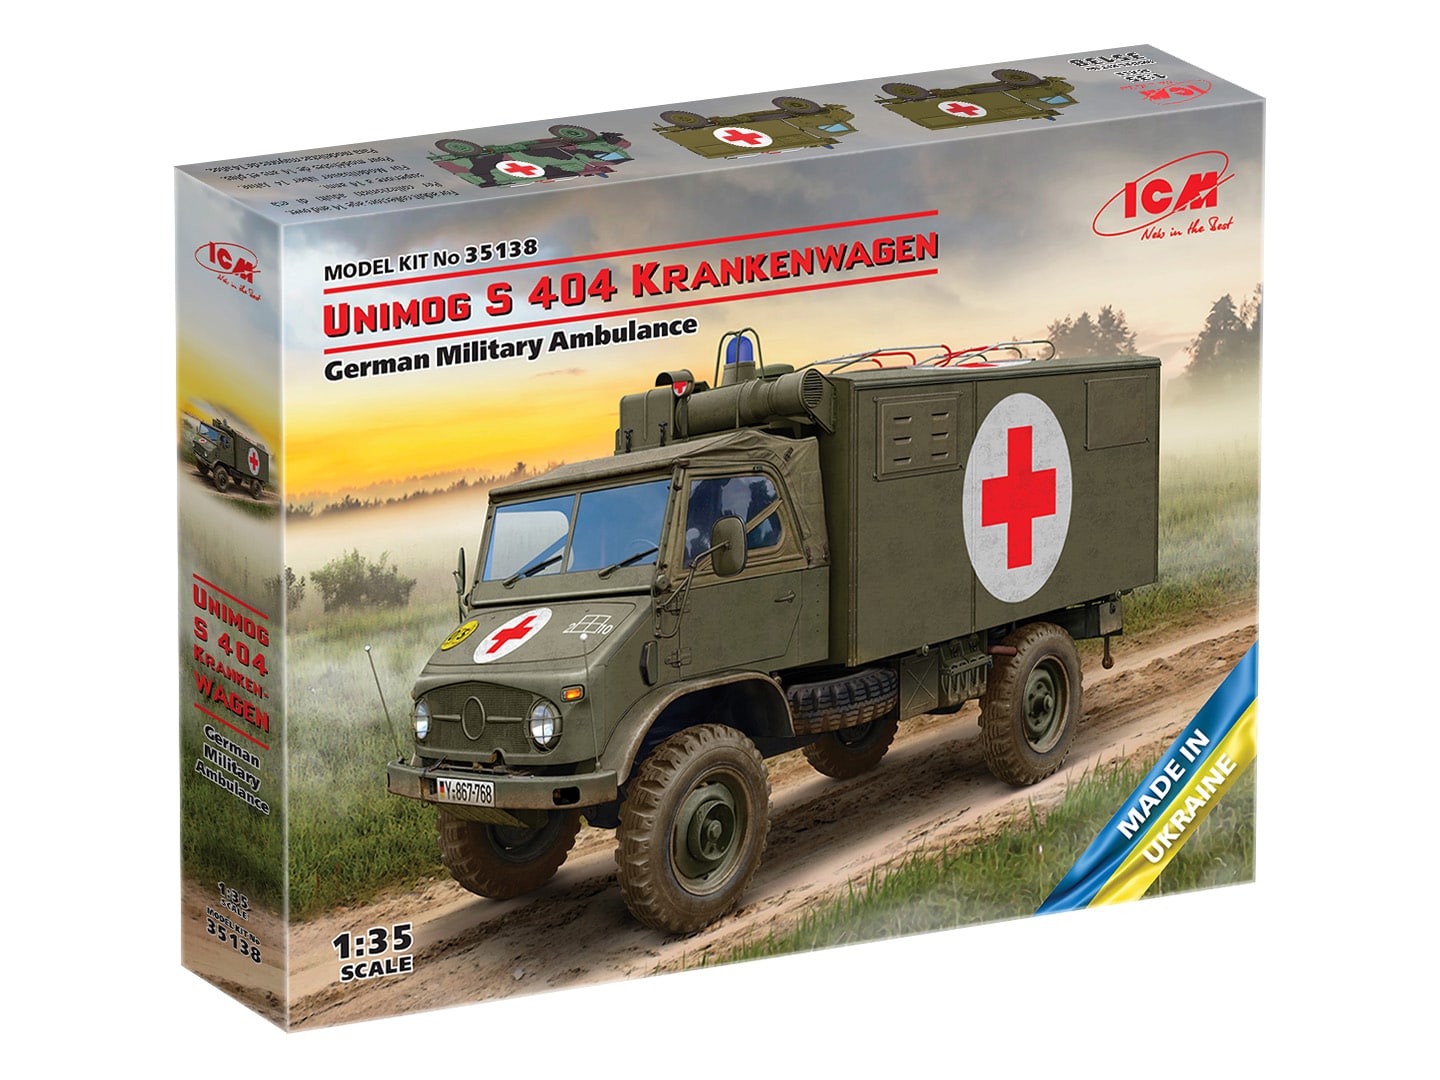 Unimog S 404 Krankenwagen German Military Ambulance Box